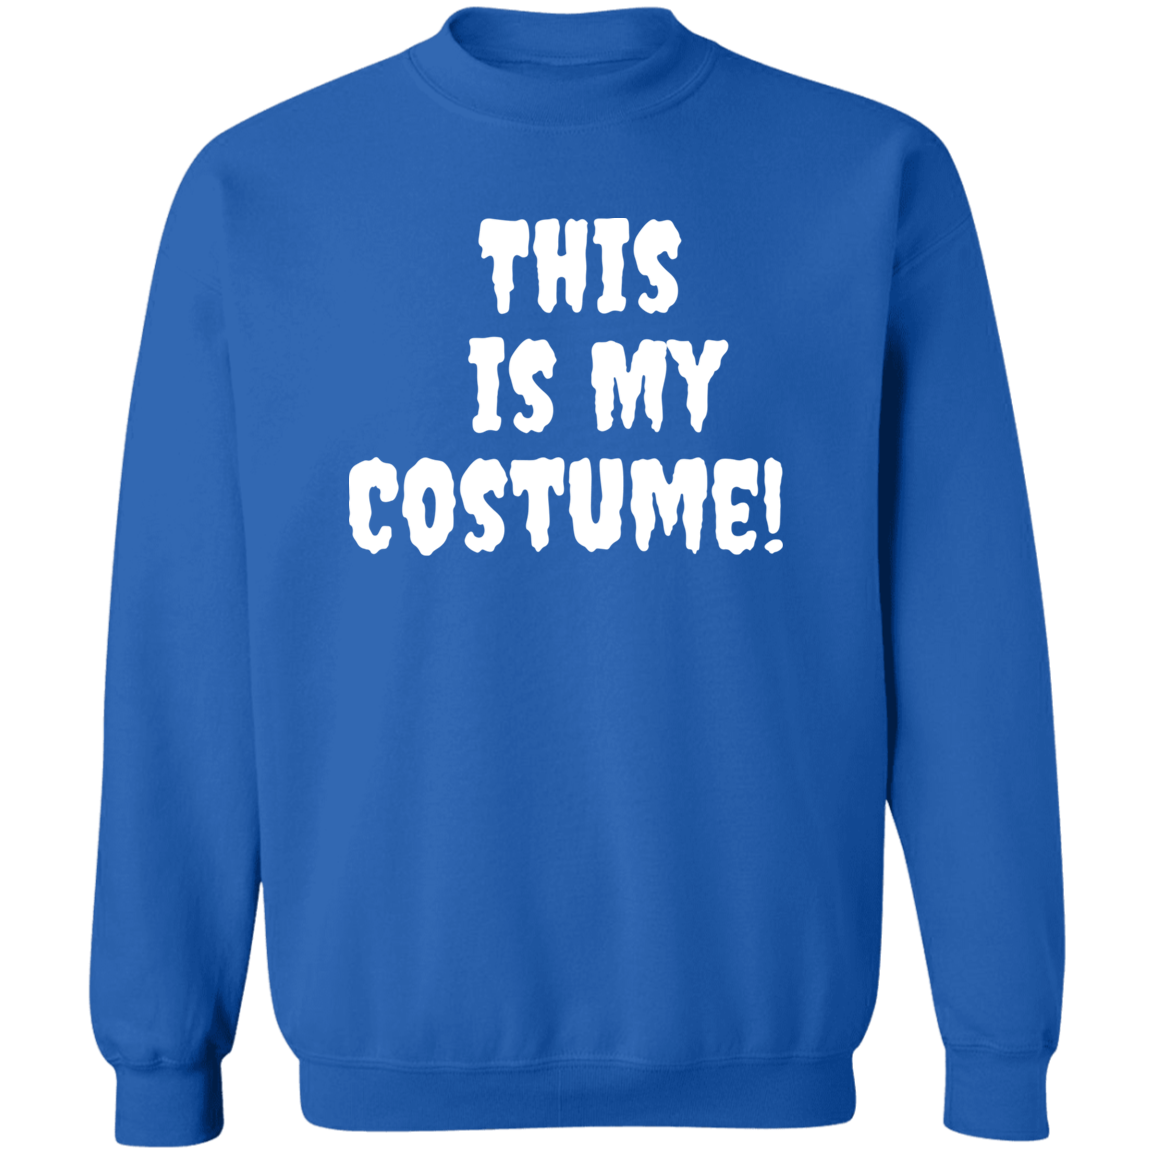 This Is My Costume! Pullover Crewneck Sweatshirt